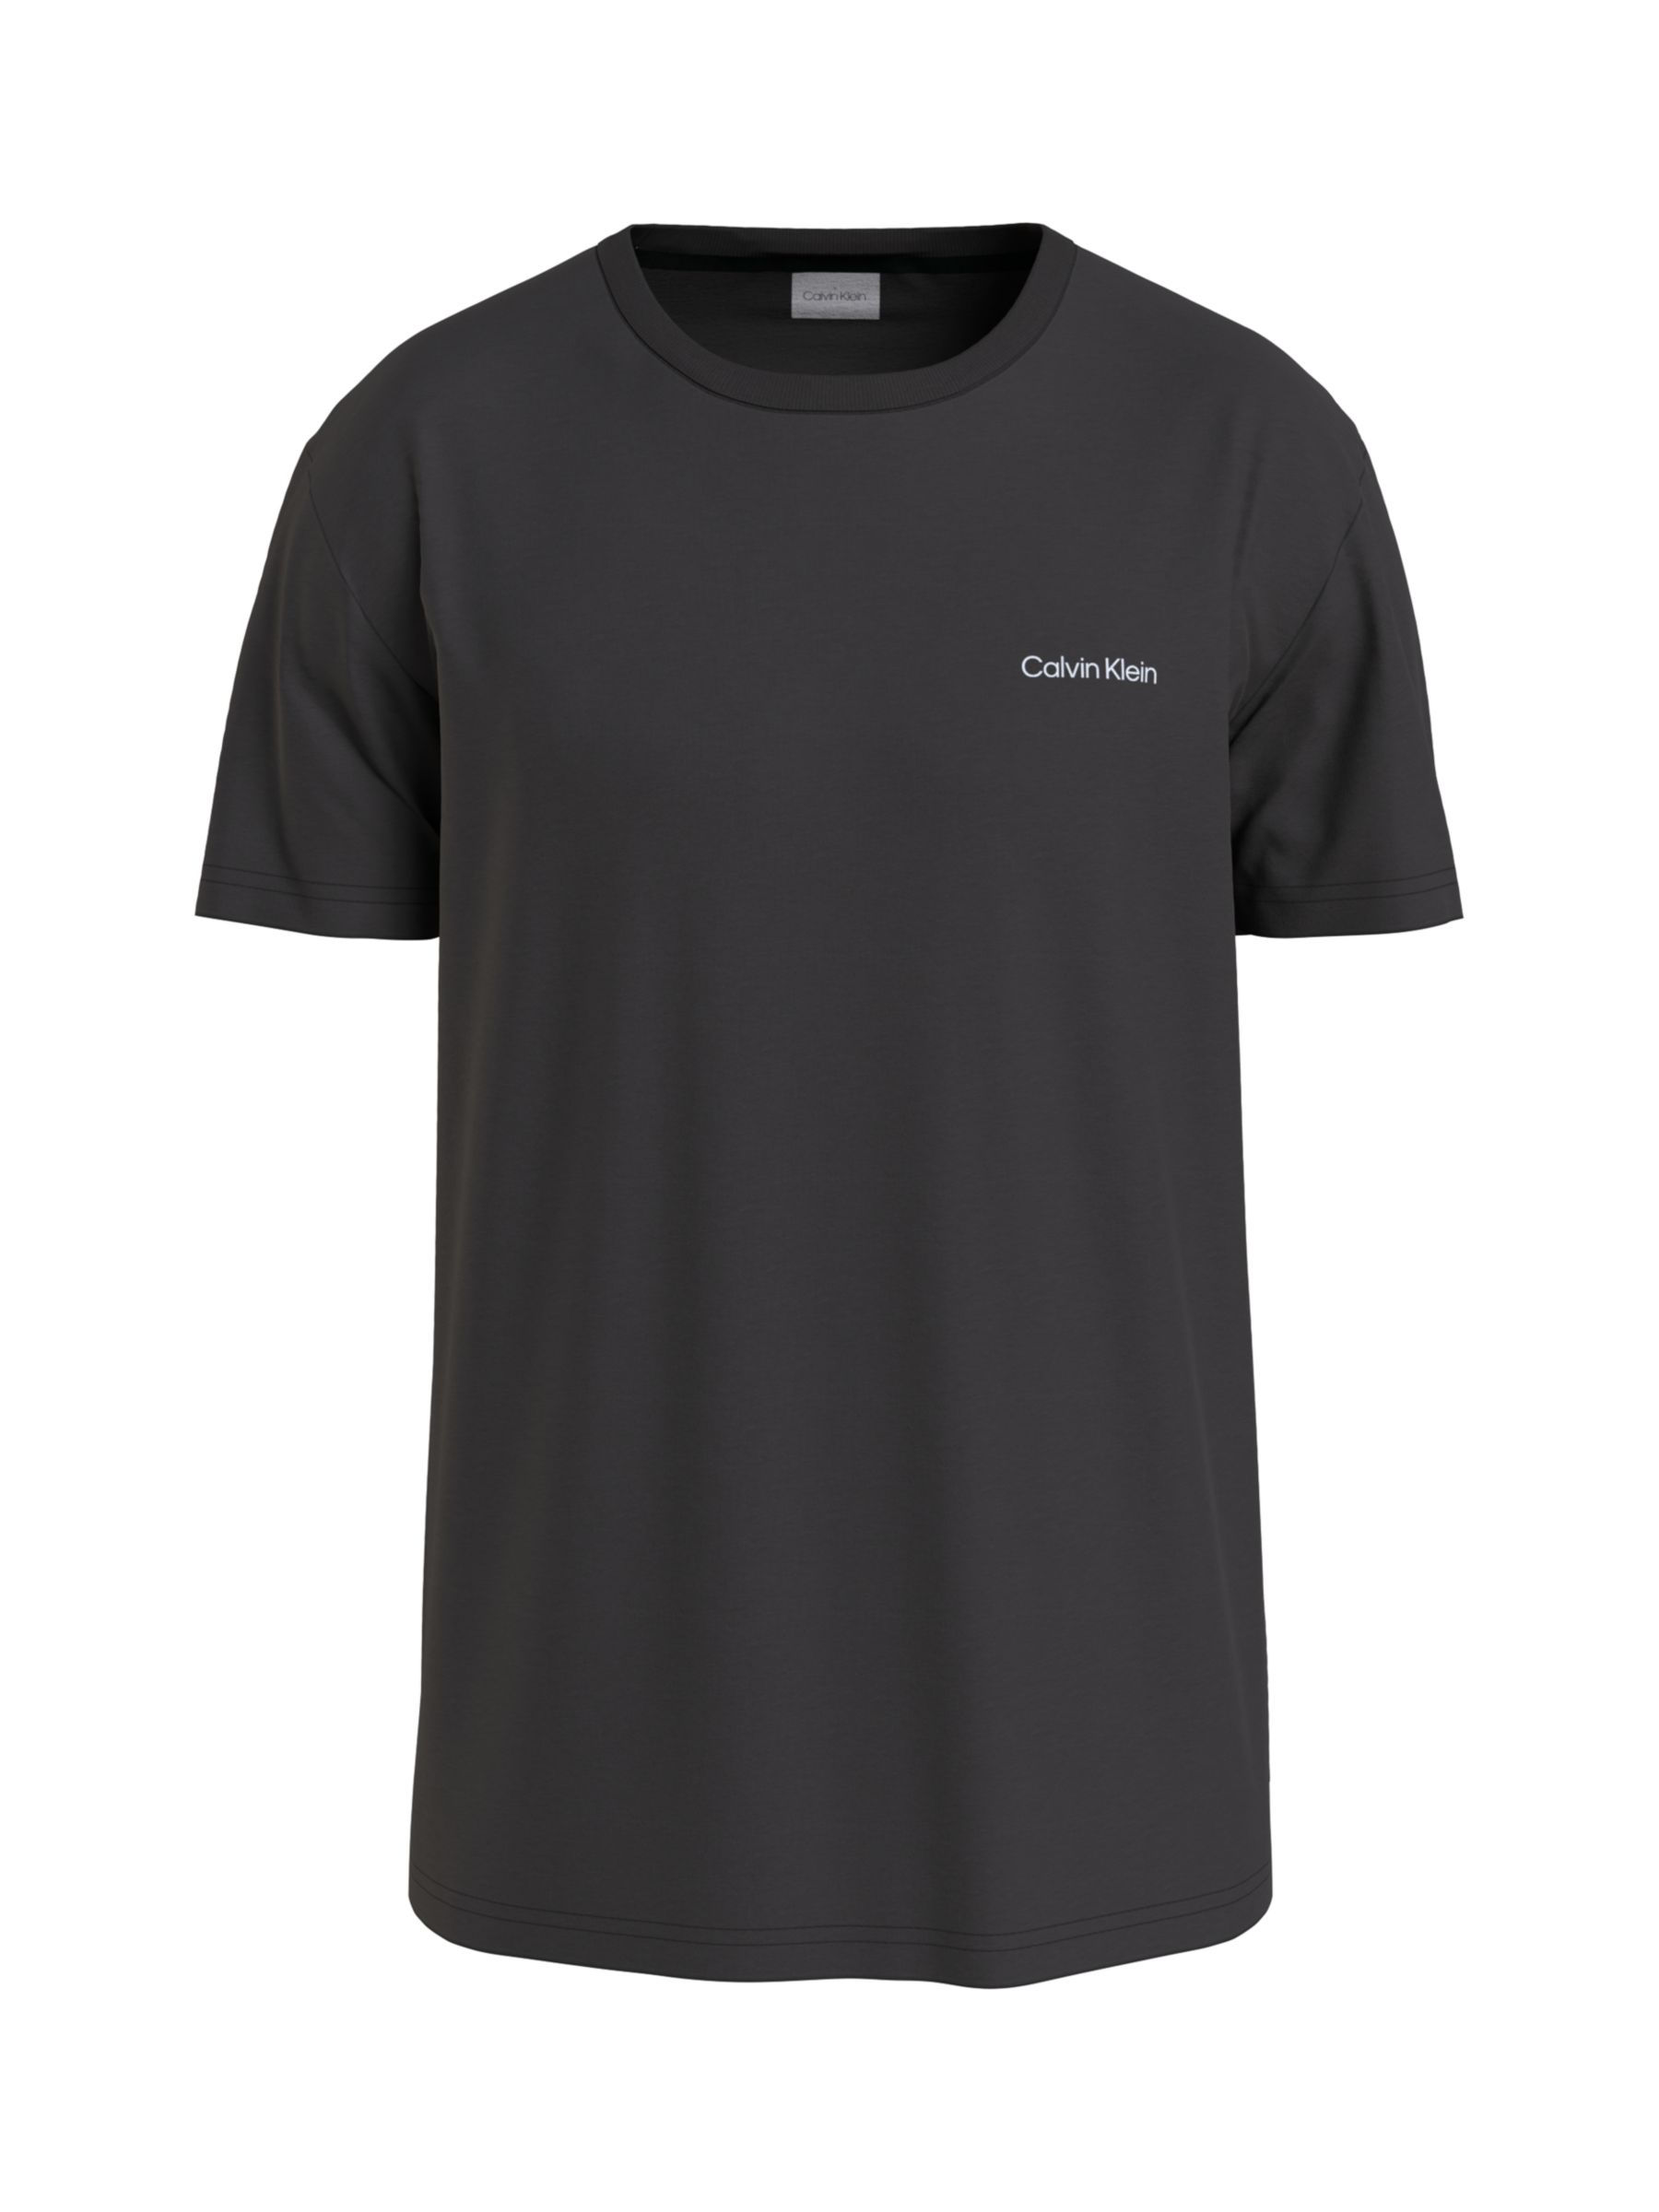 Calvin Klein Jeans Core Logo T-Shirt, Ck Black at John Lewis